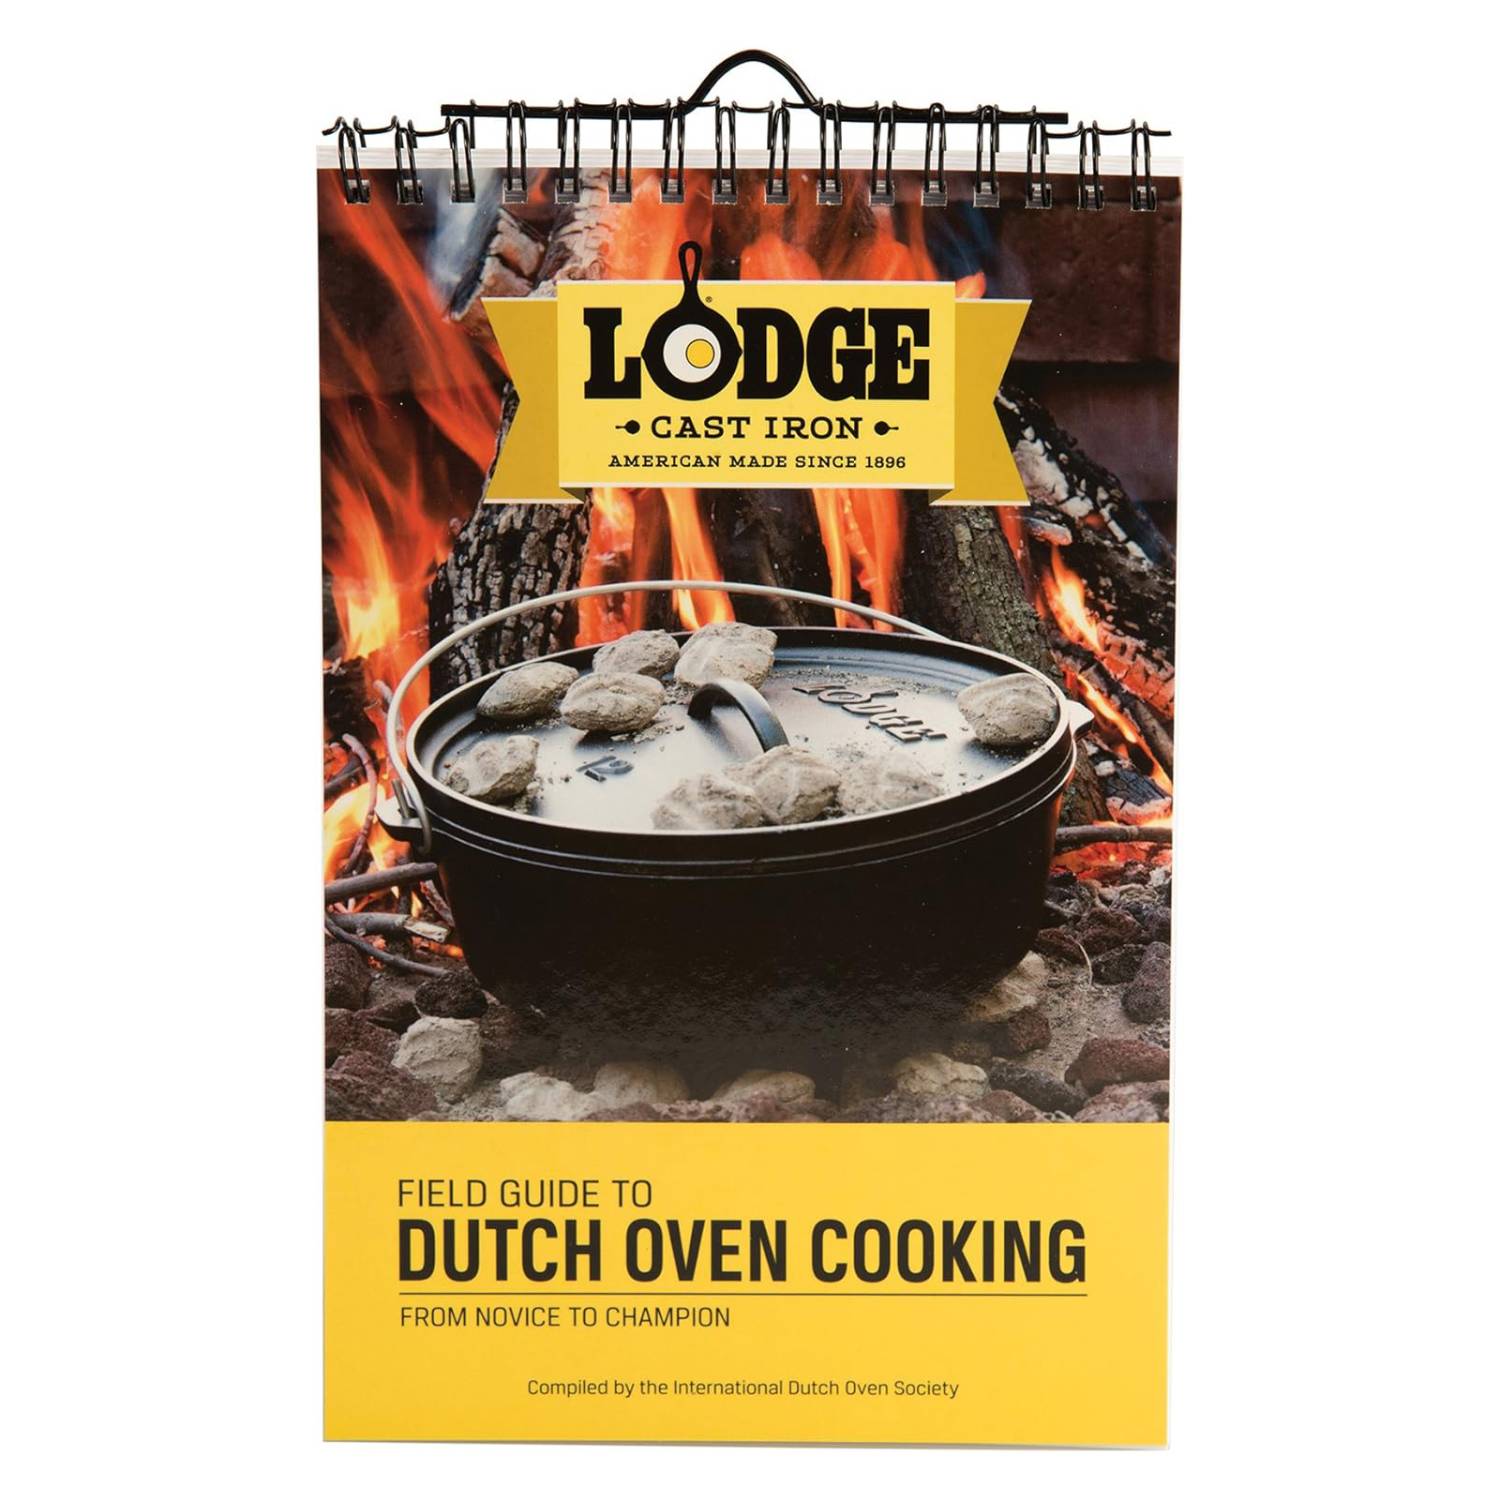 https://cdn.commercev3.net/cdn.lehmans.com/images/popup/FGD0C-Dutch_Oven_Cookbook-001_1500.jpg